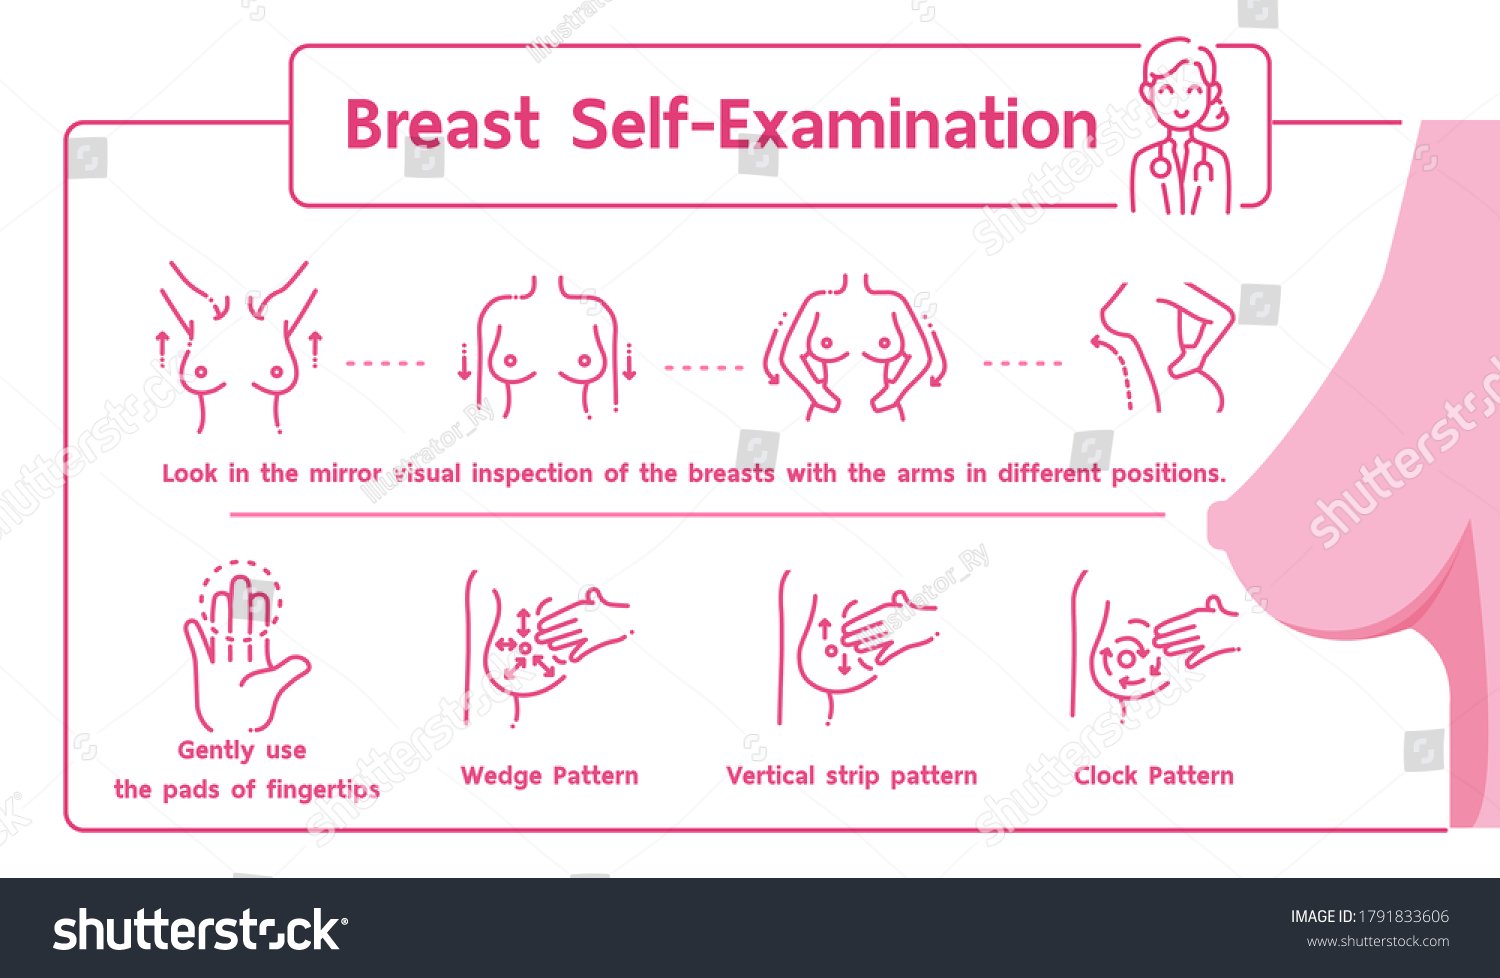 16063 Imagens De Examination Of Breast Imagens Fotos Stock E Vetores Shutterstock